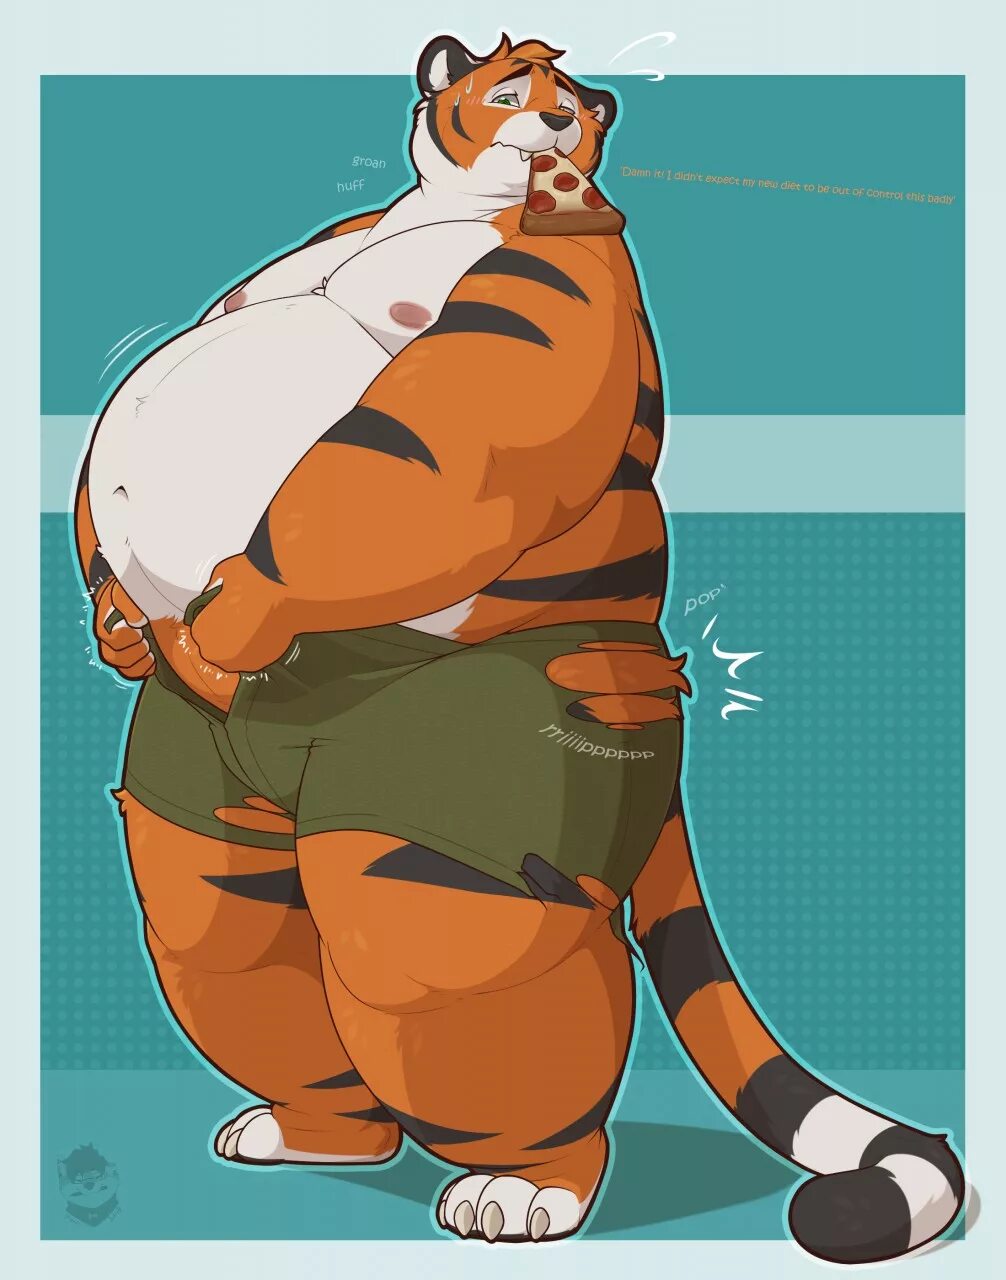 Furry big belly. Big belly inflation тигр. Big belly фурри. Фурри Bear Weight gain.